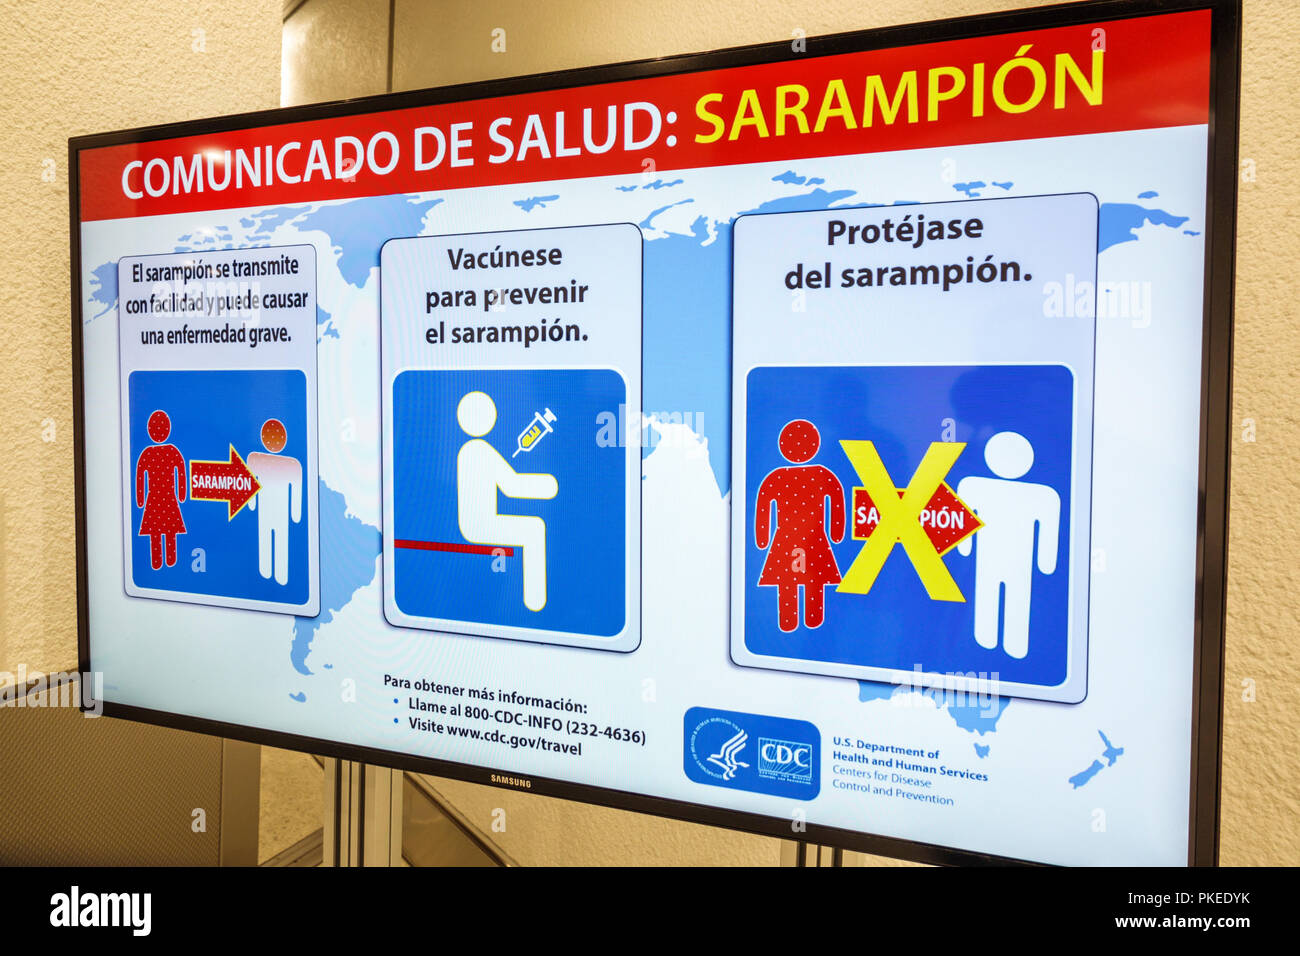 Miami Florida,International Airport MIA,health information sign,CDC,Center for Disease Control,sarampion,measles warning,vaccine,Spanish language,FL18 Stock Photo